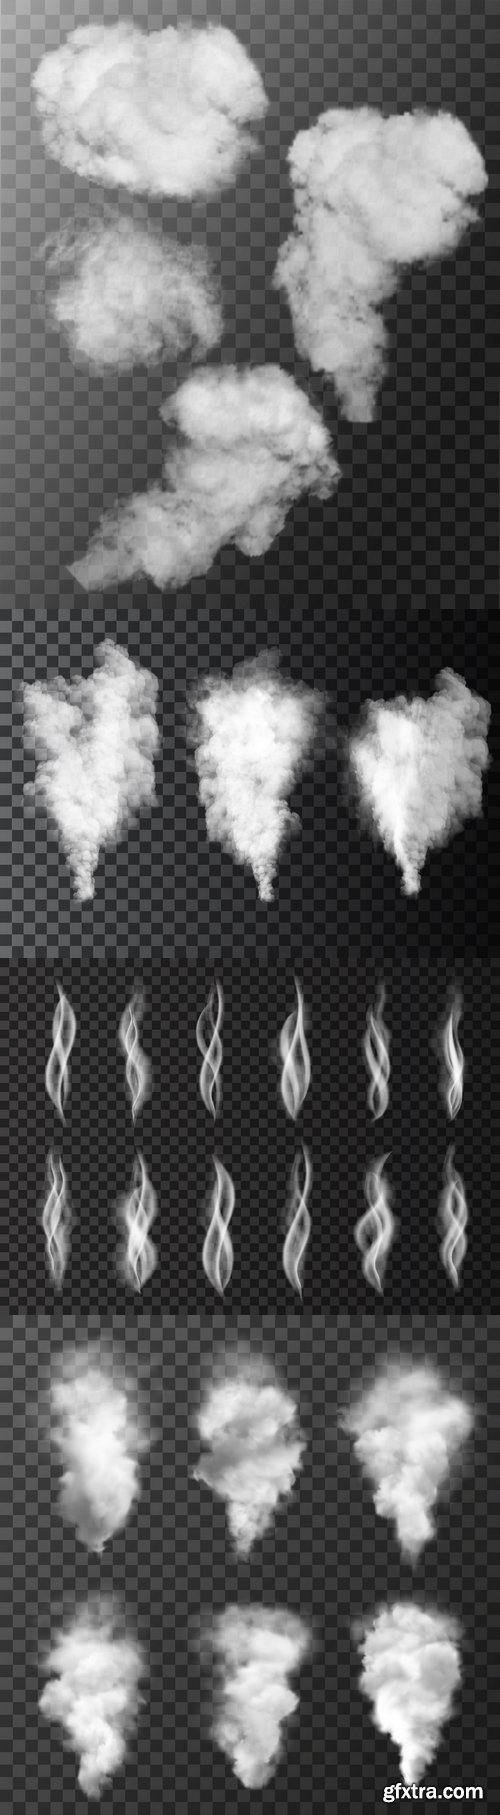 Vectors - Realistic Smoke 9